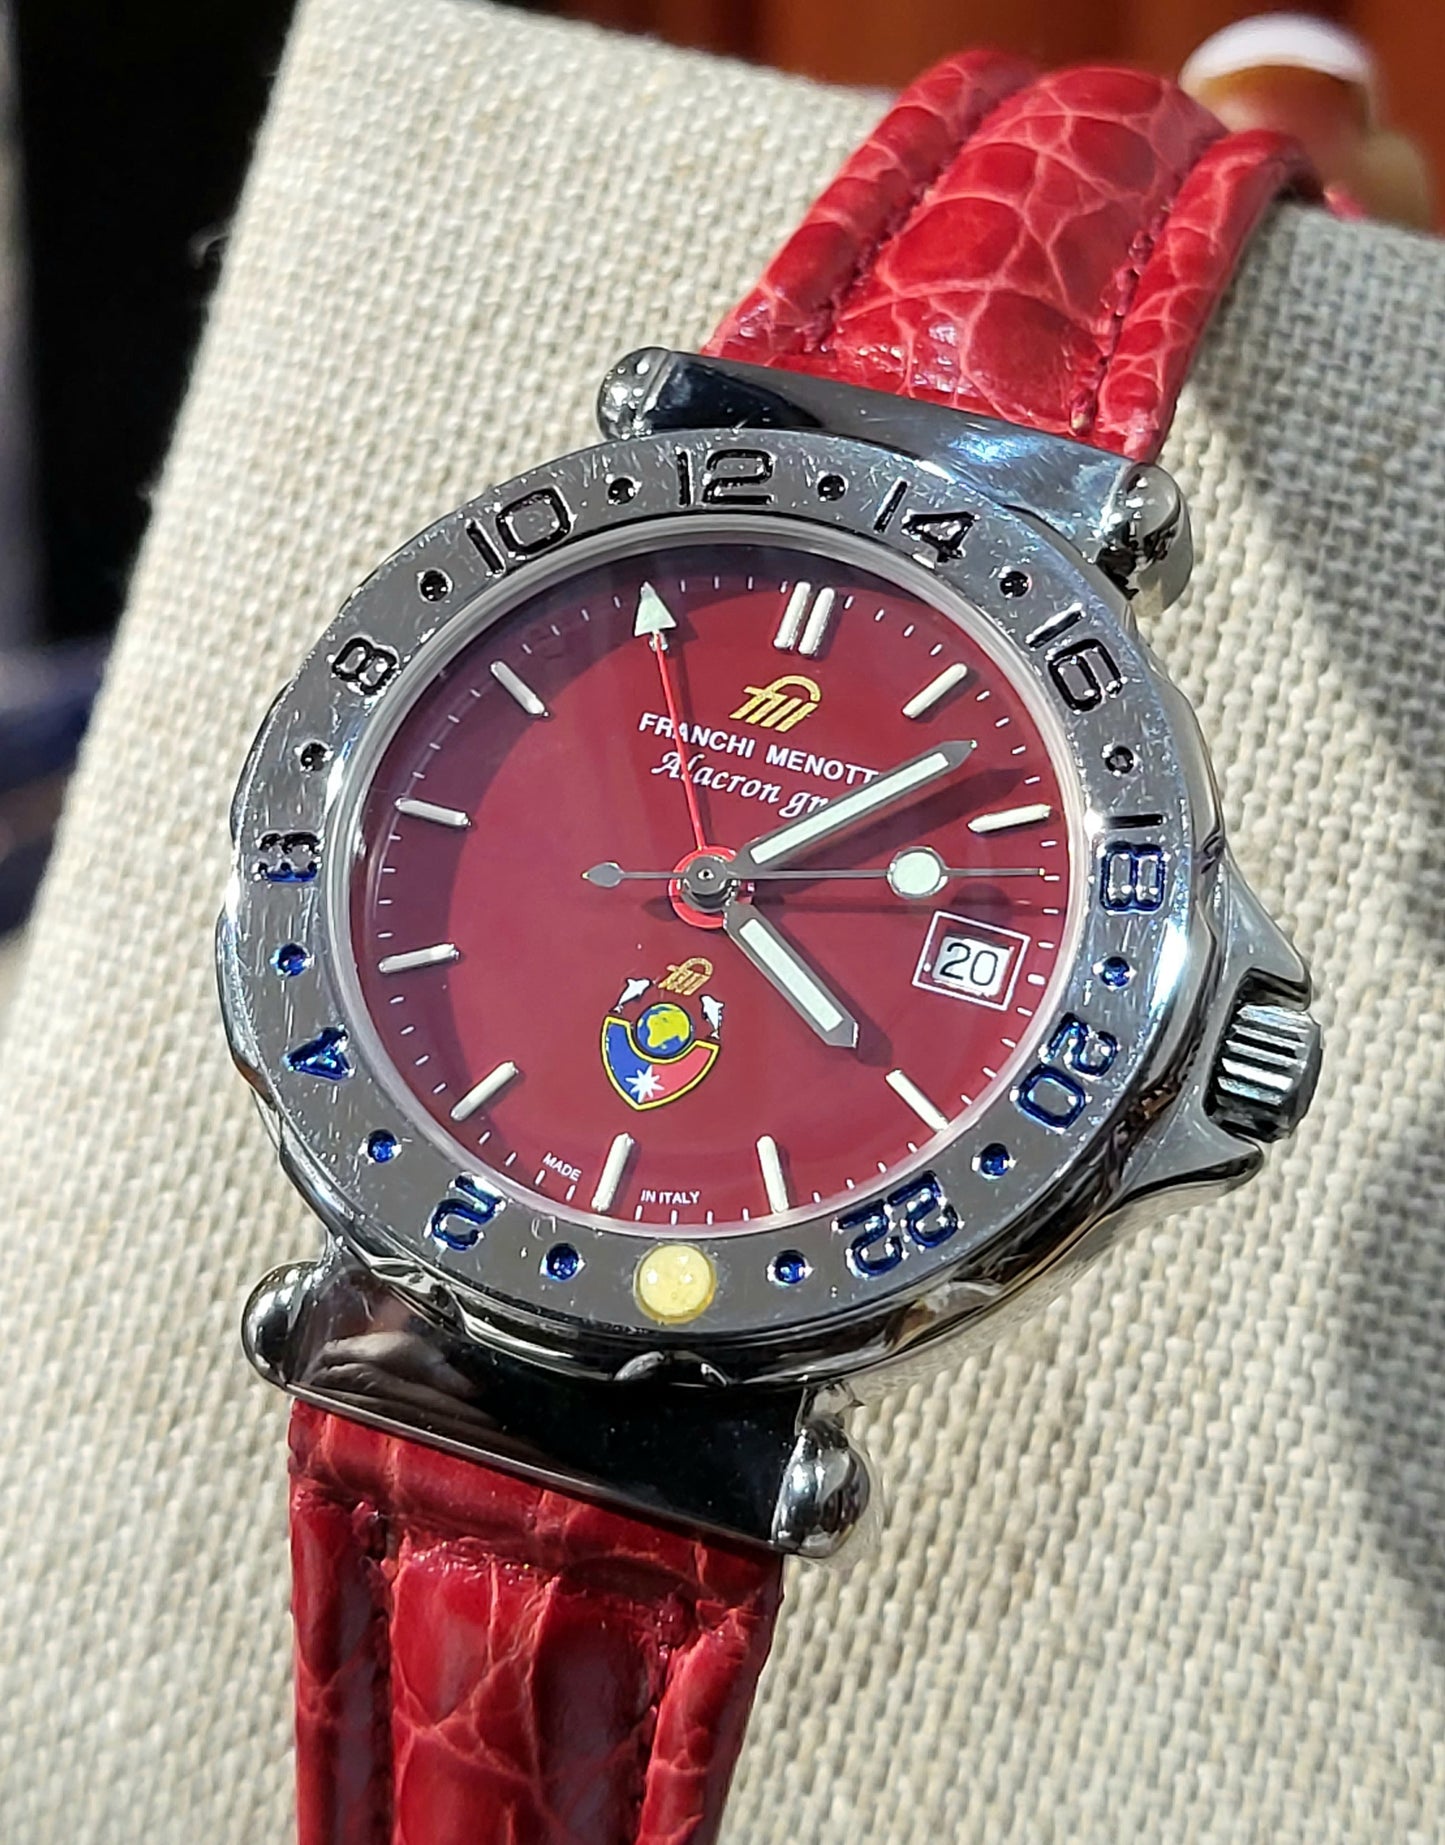 Franchi Menotti Italian Red Chronograph Watch